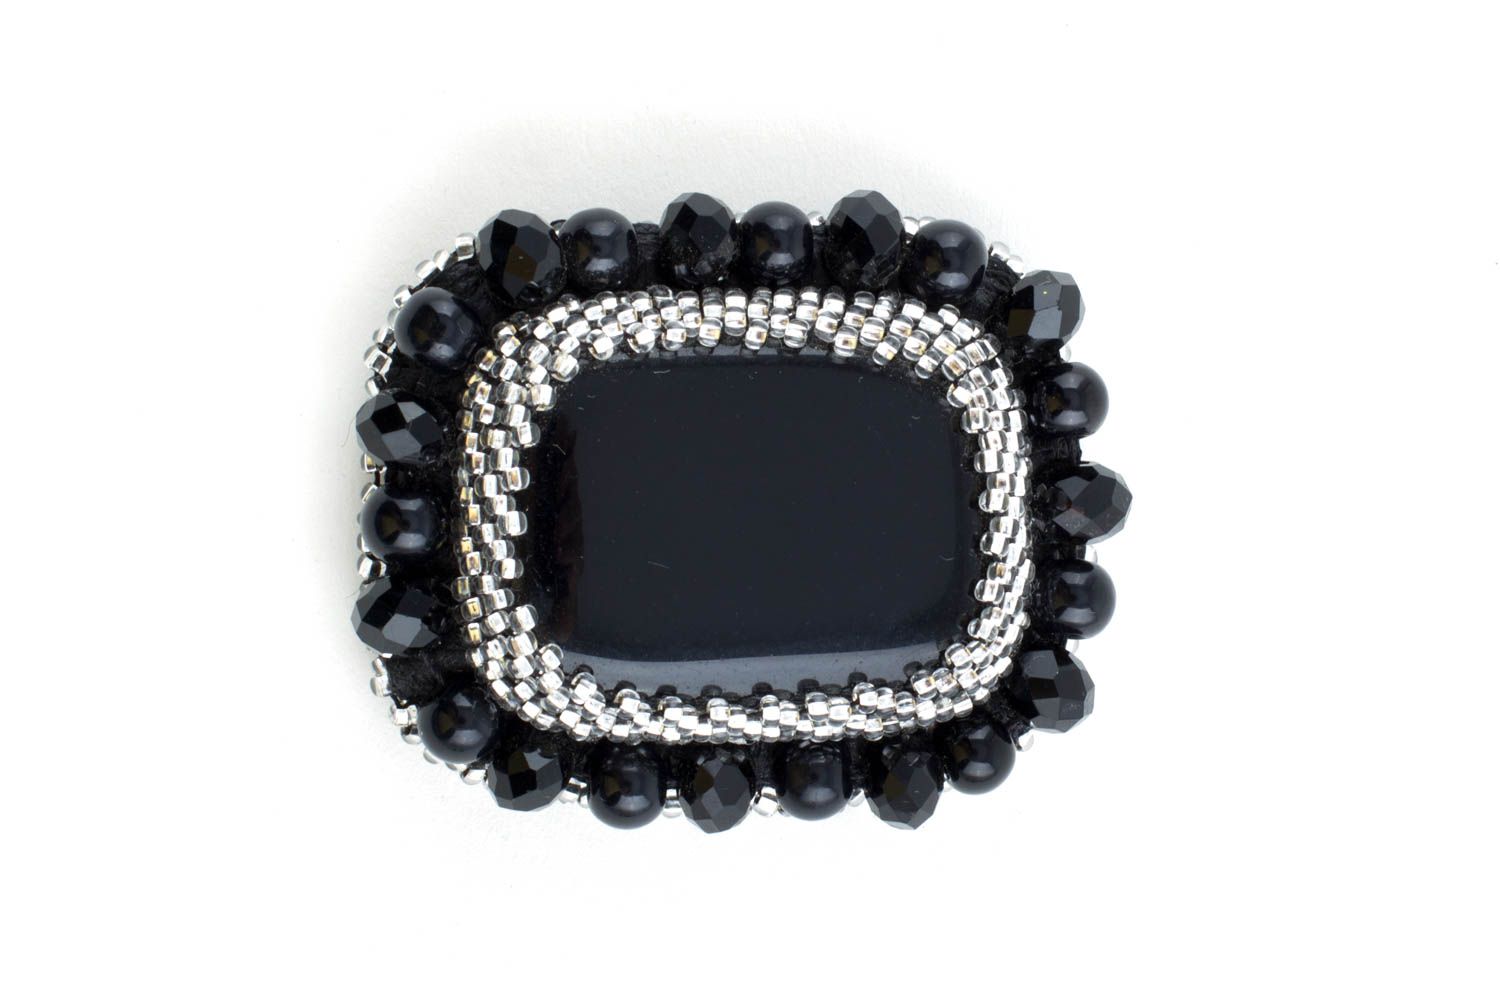 Handmade elegant festive black agate brooch with seed beads on leather basis photo 2